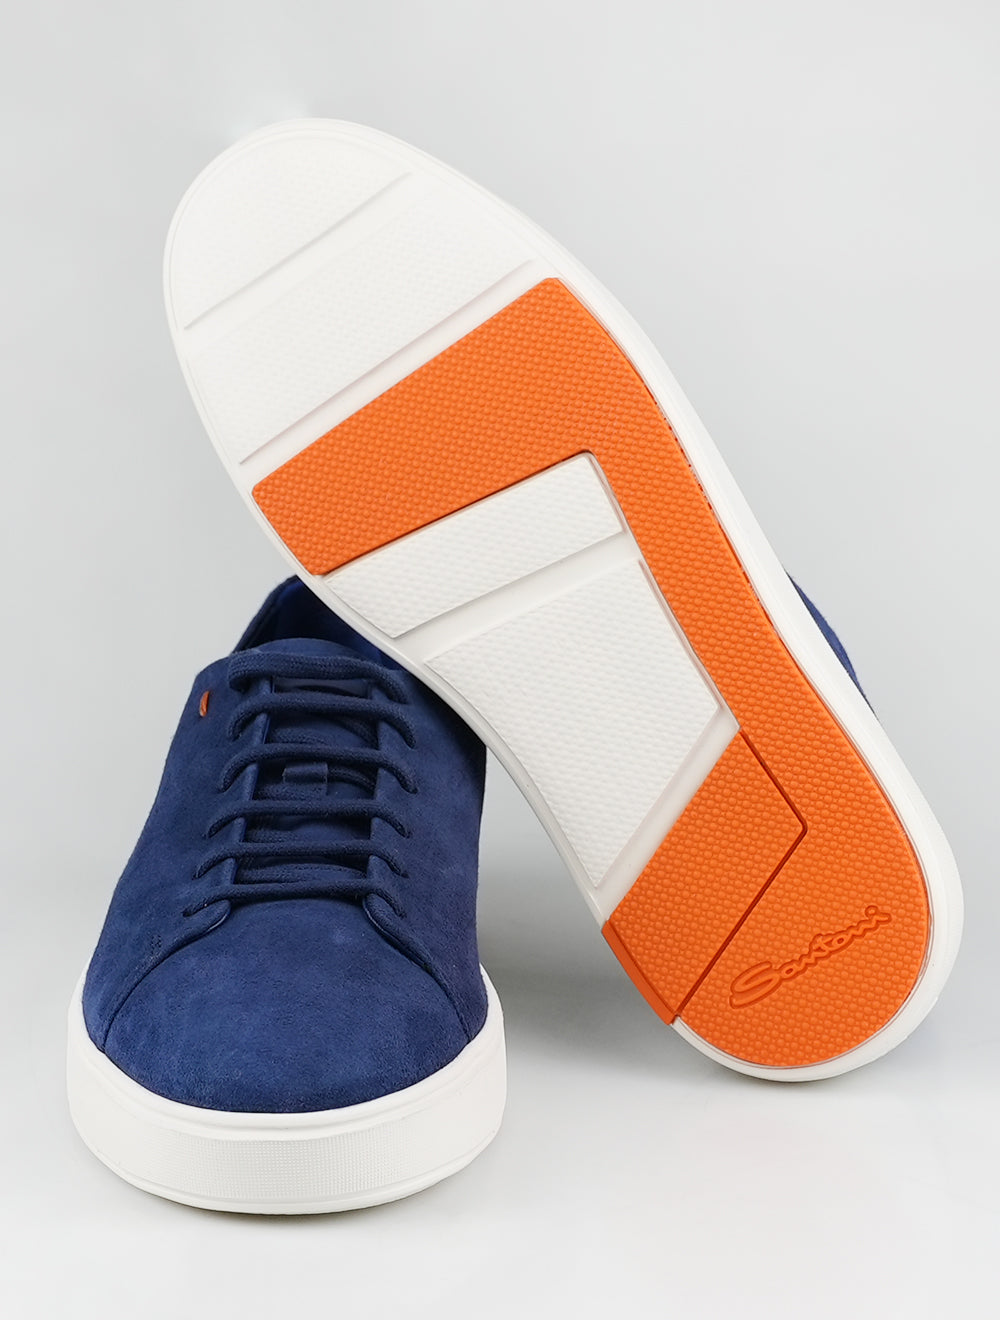 Santoni Blue Leather Suede Sneakers